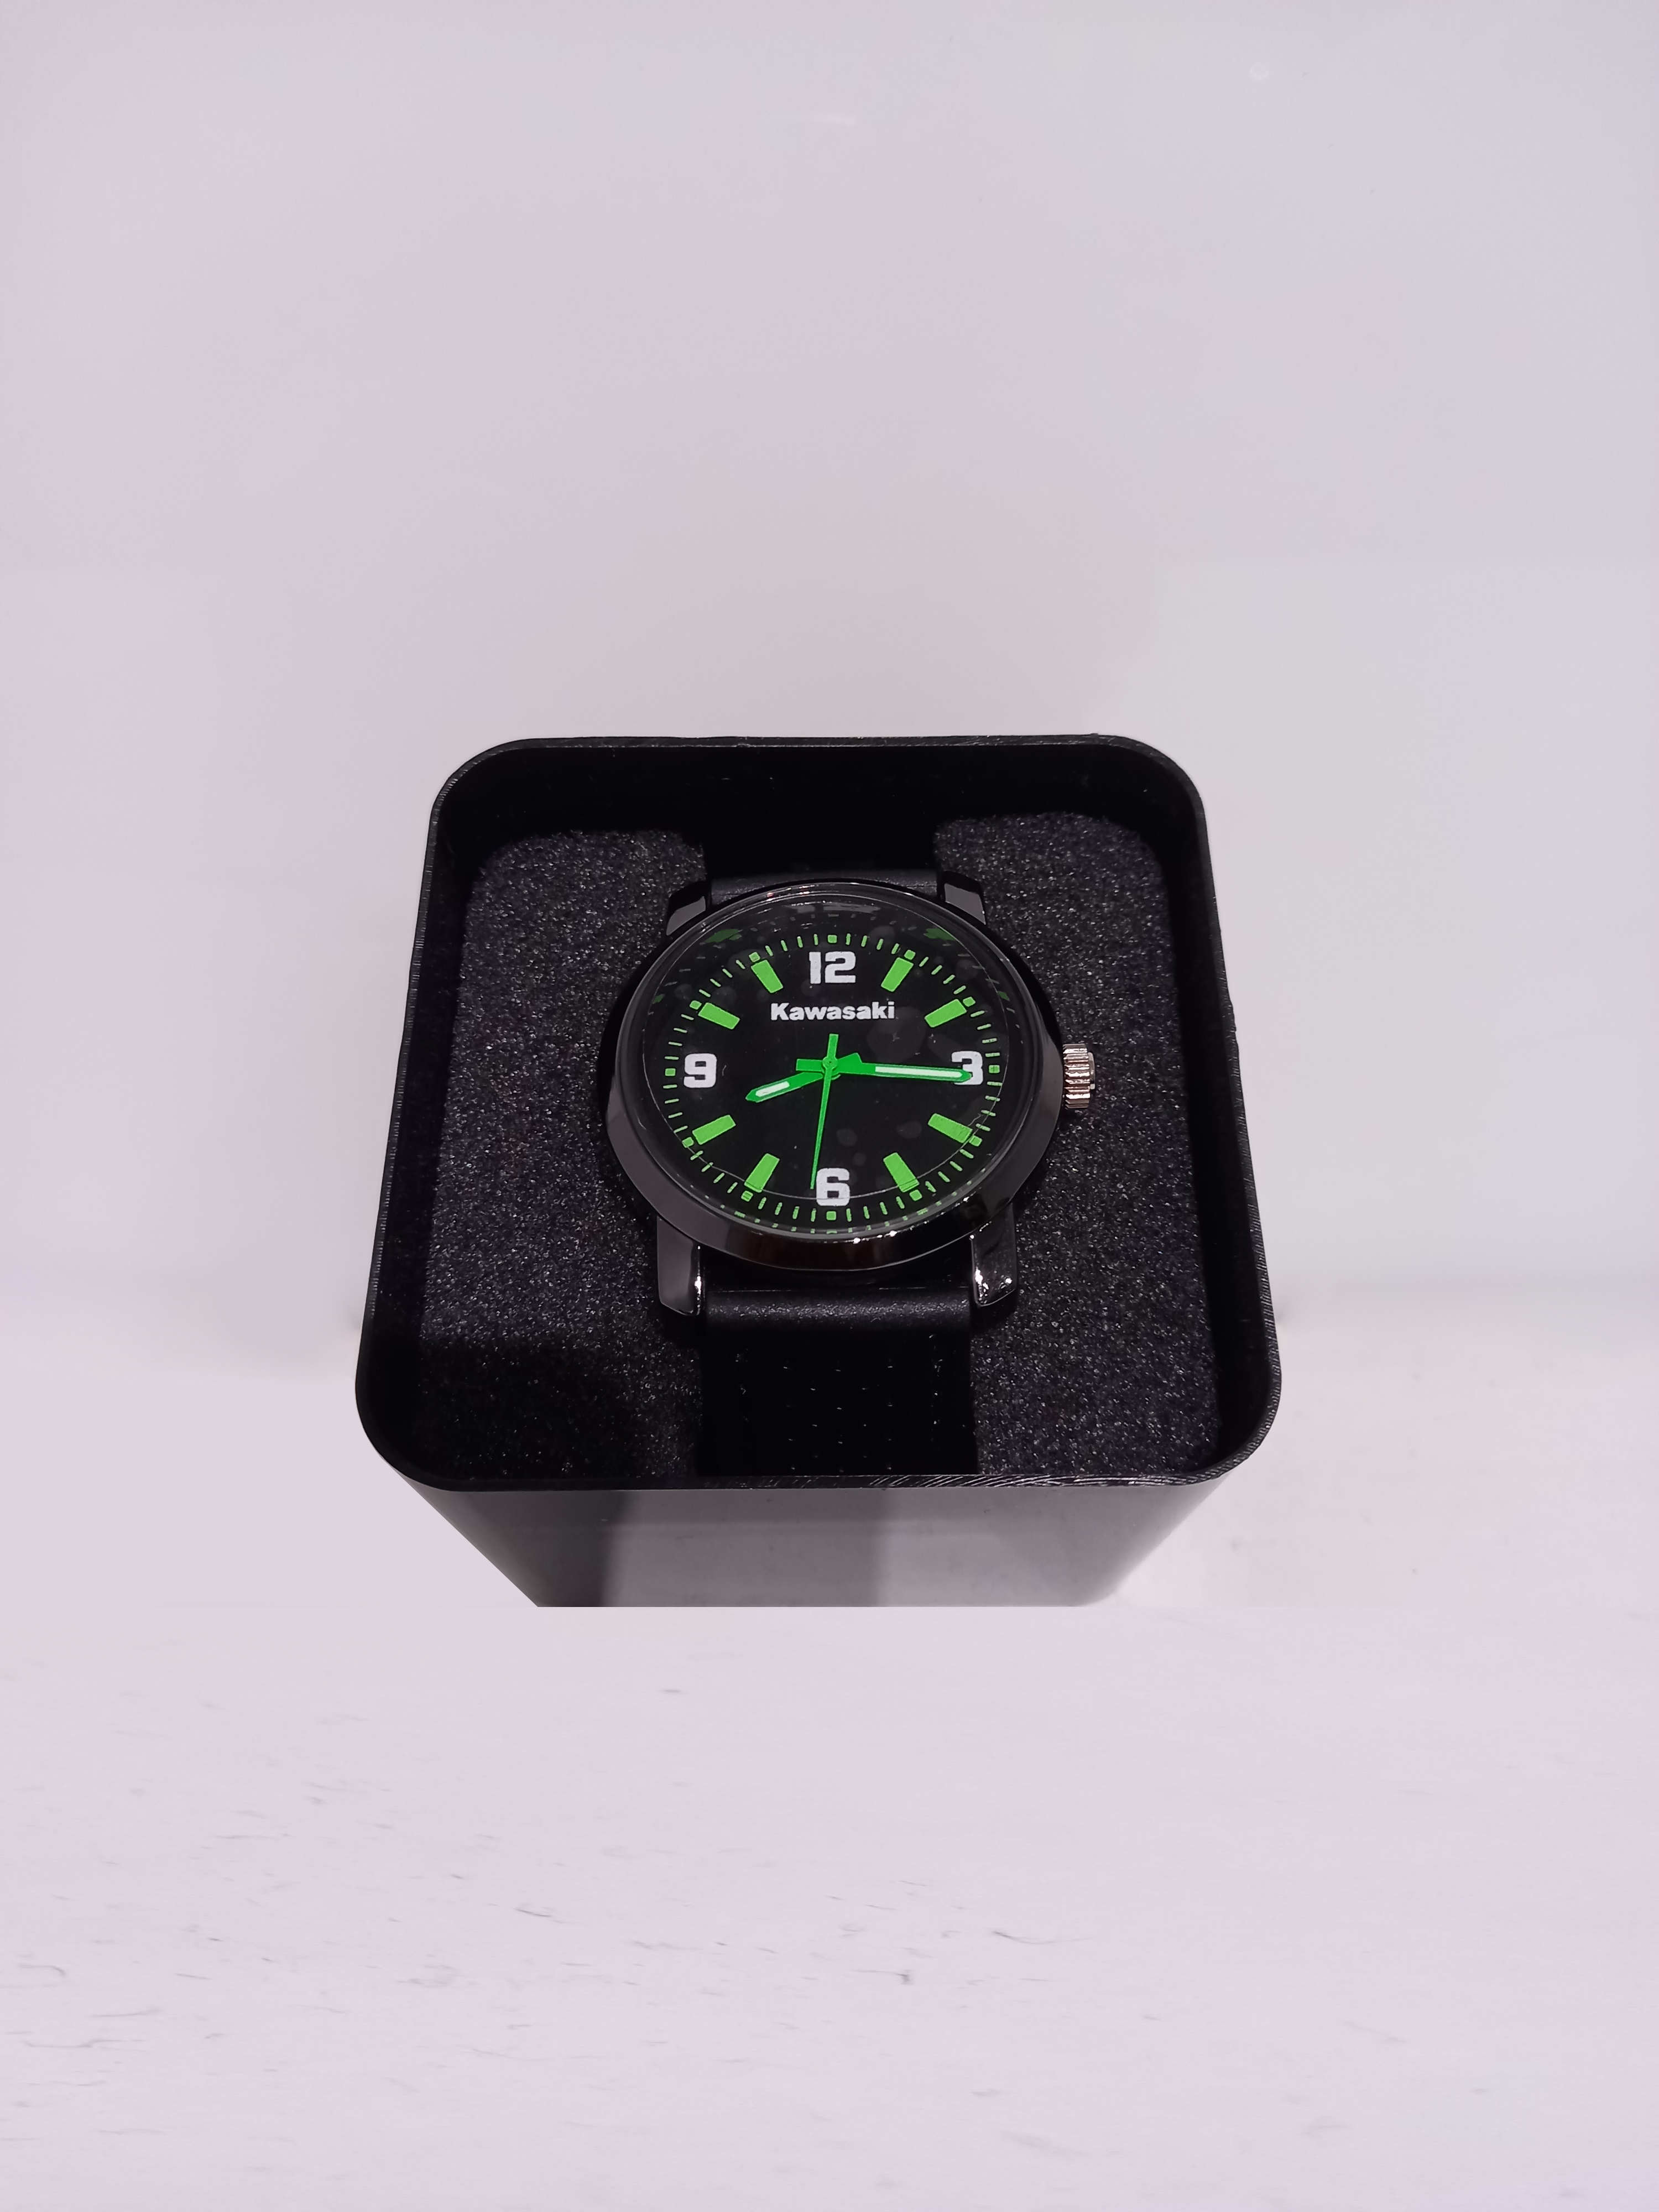 New Originale. Kawasaki Classic Anolog Watch 186SPM0029 Gift Idea | eBay